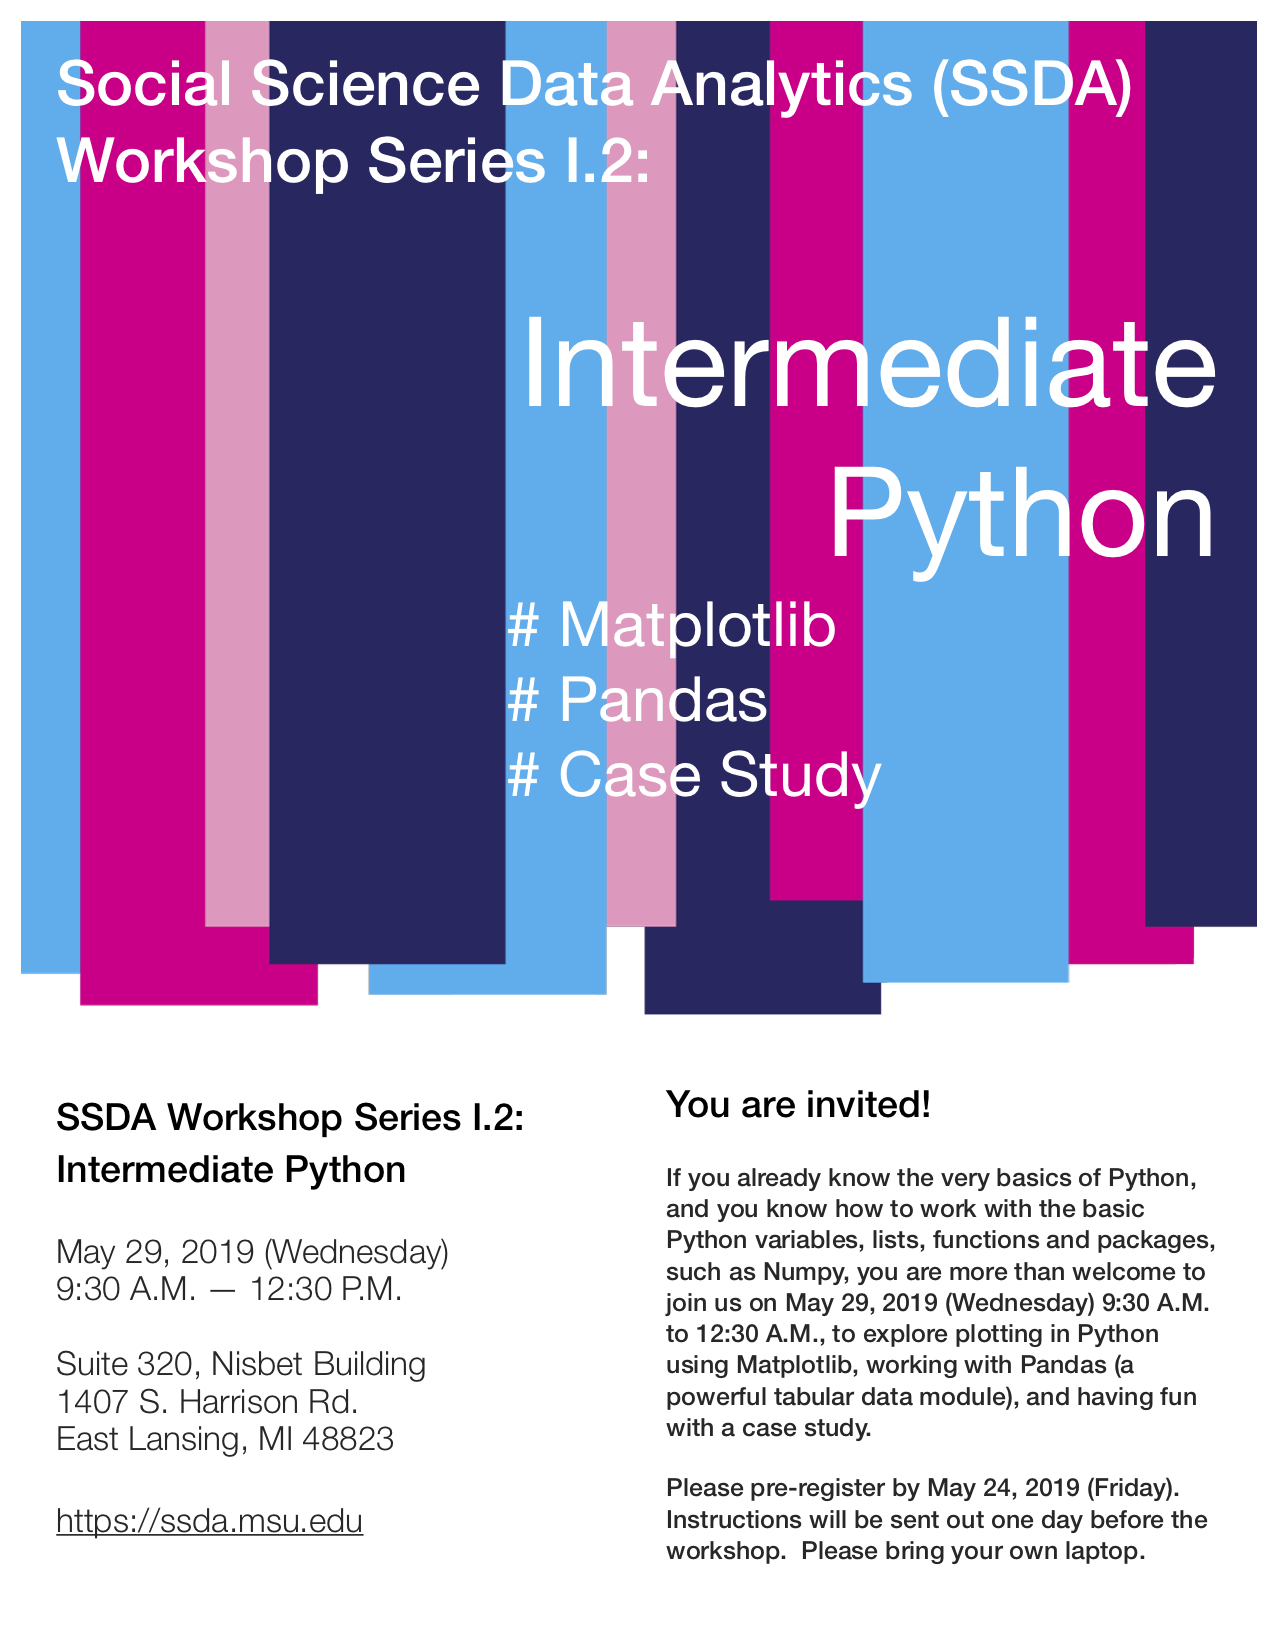 SSDA Workshop Flyer - Intermediate Python